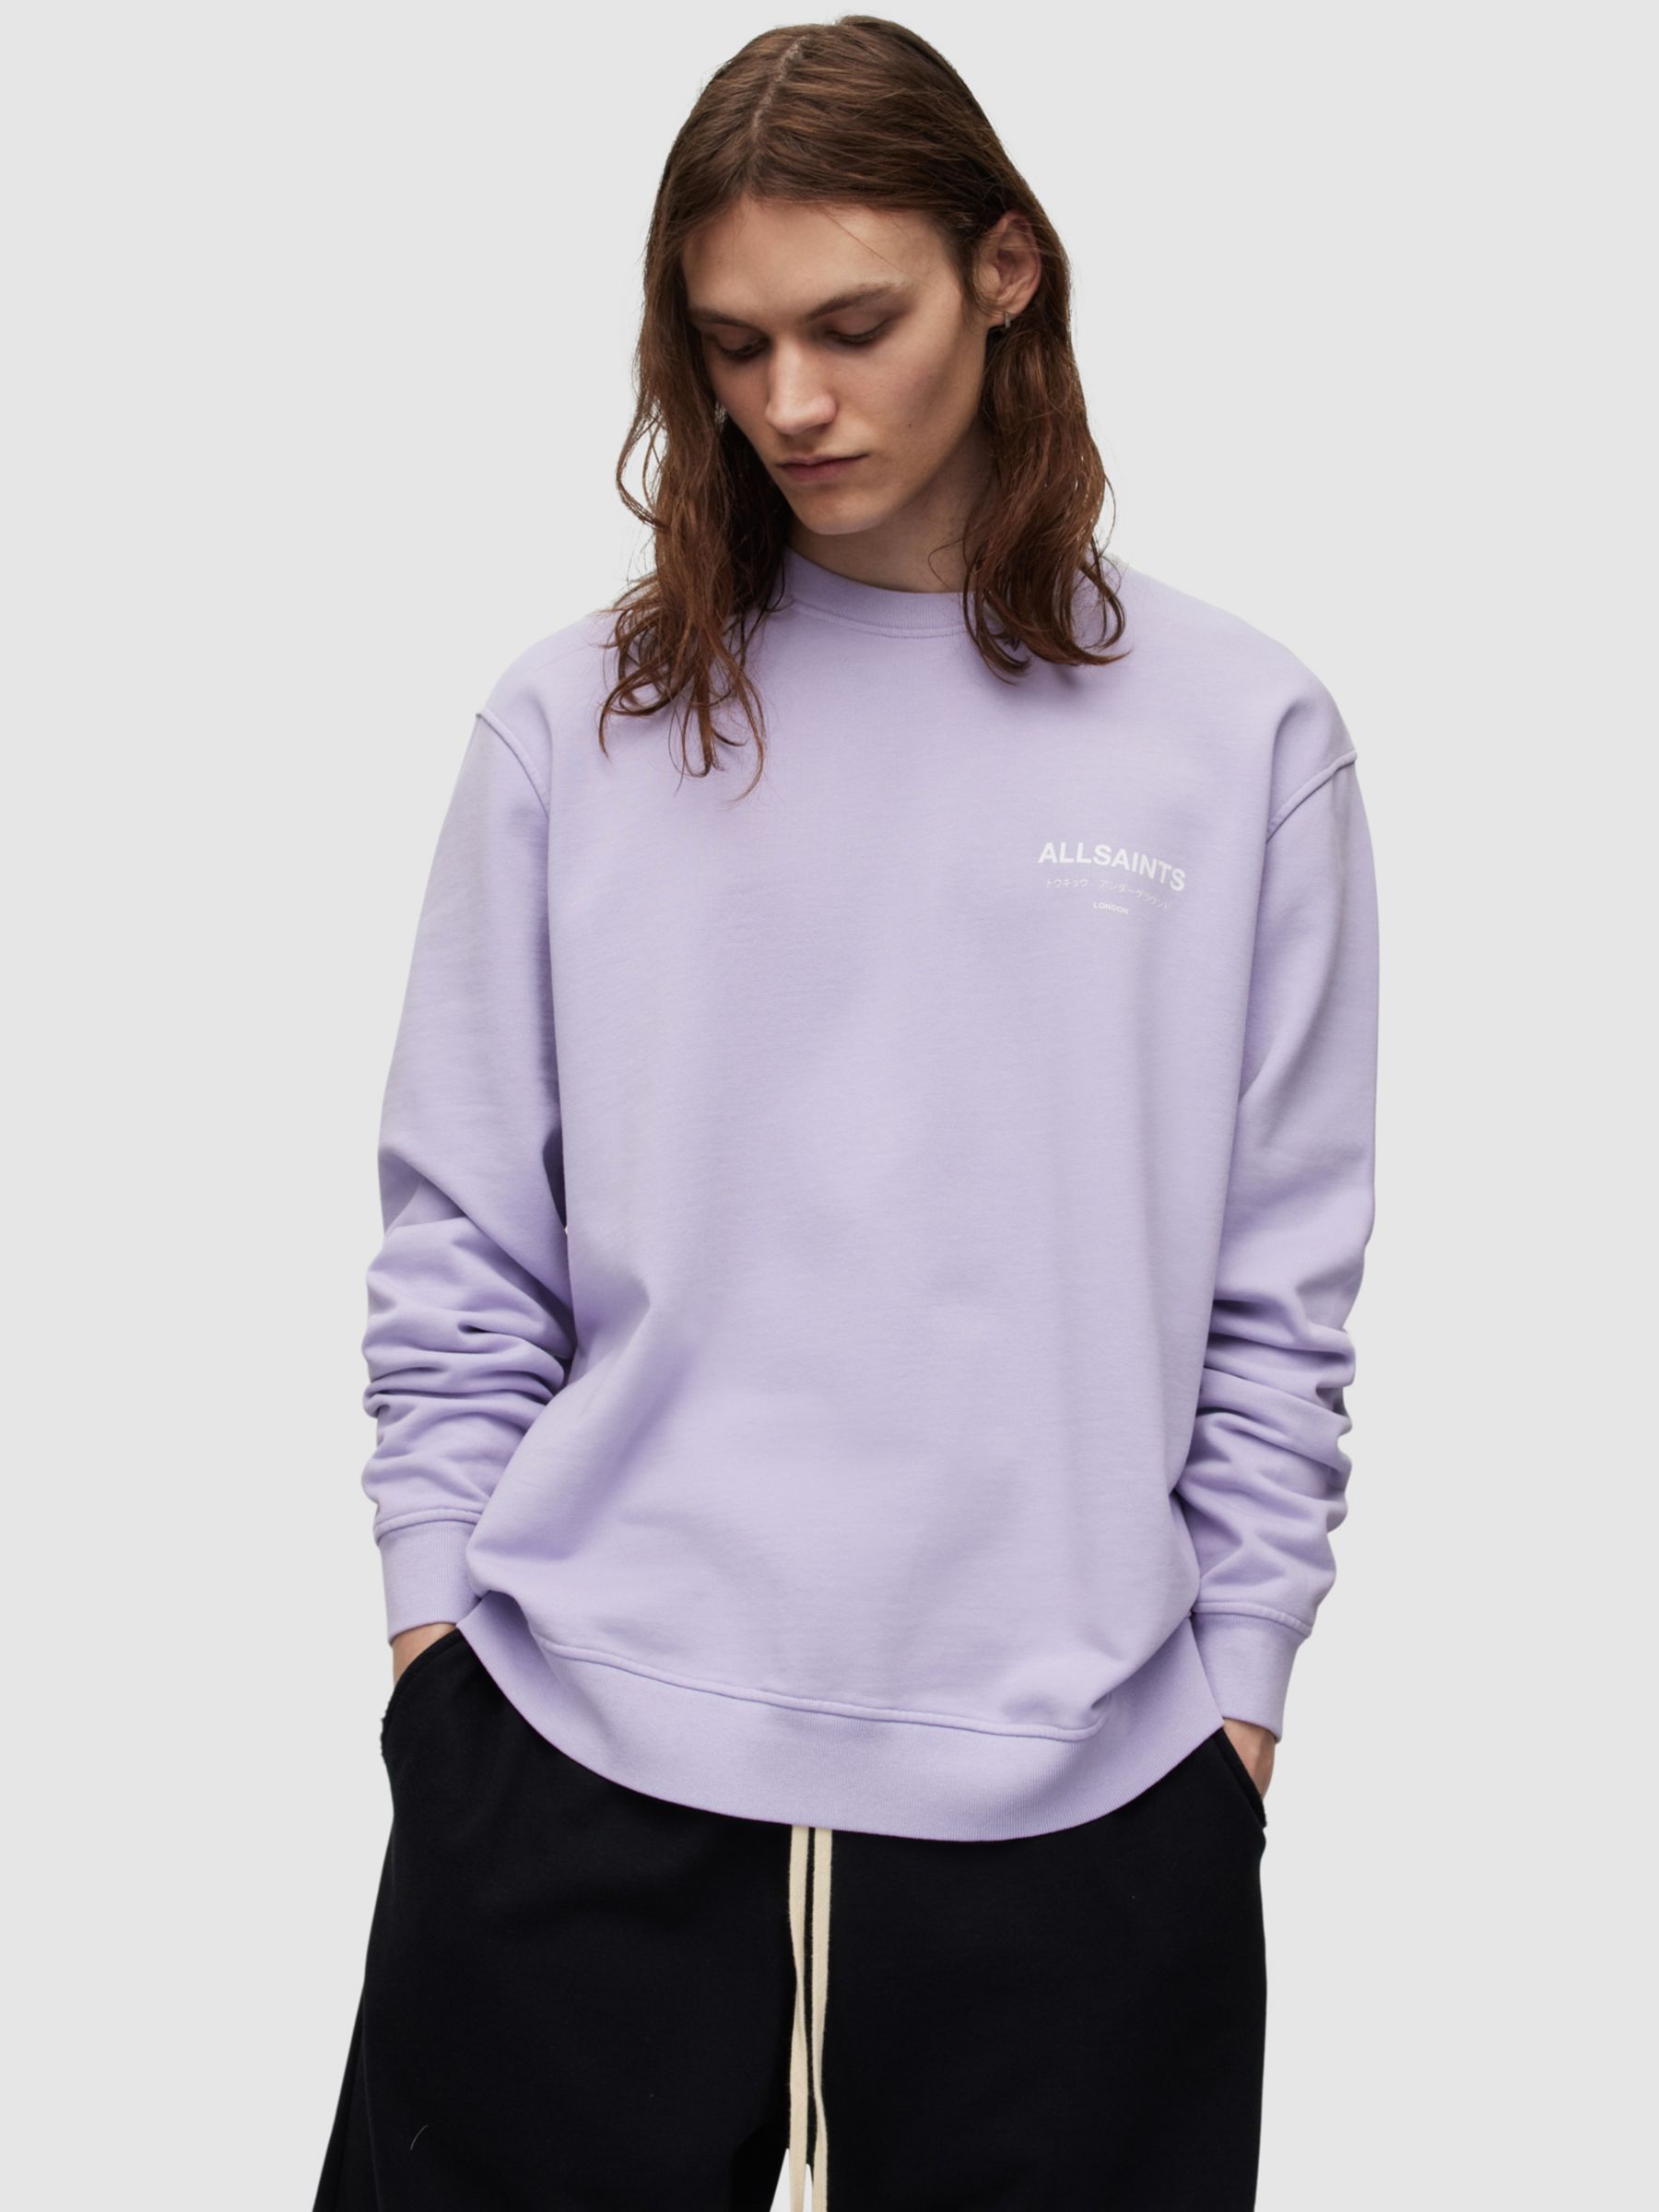 AllSaints Underground Crew Neck Sweatshirt, Lavndr Lilac/White, XL